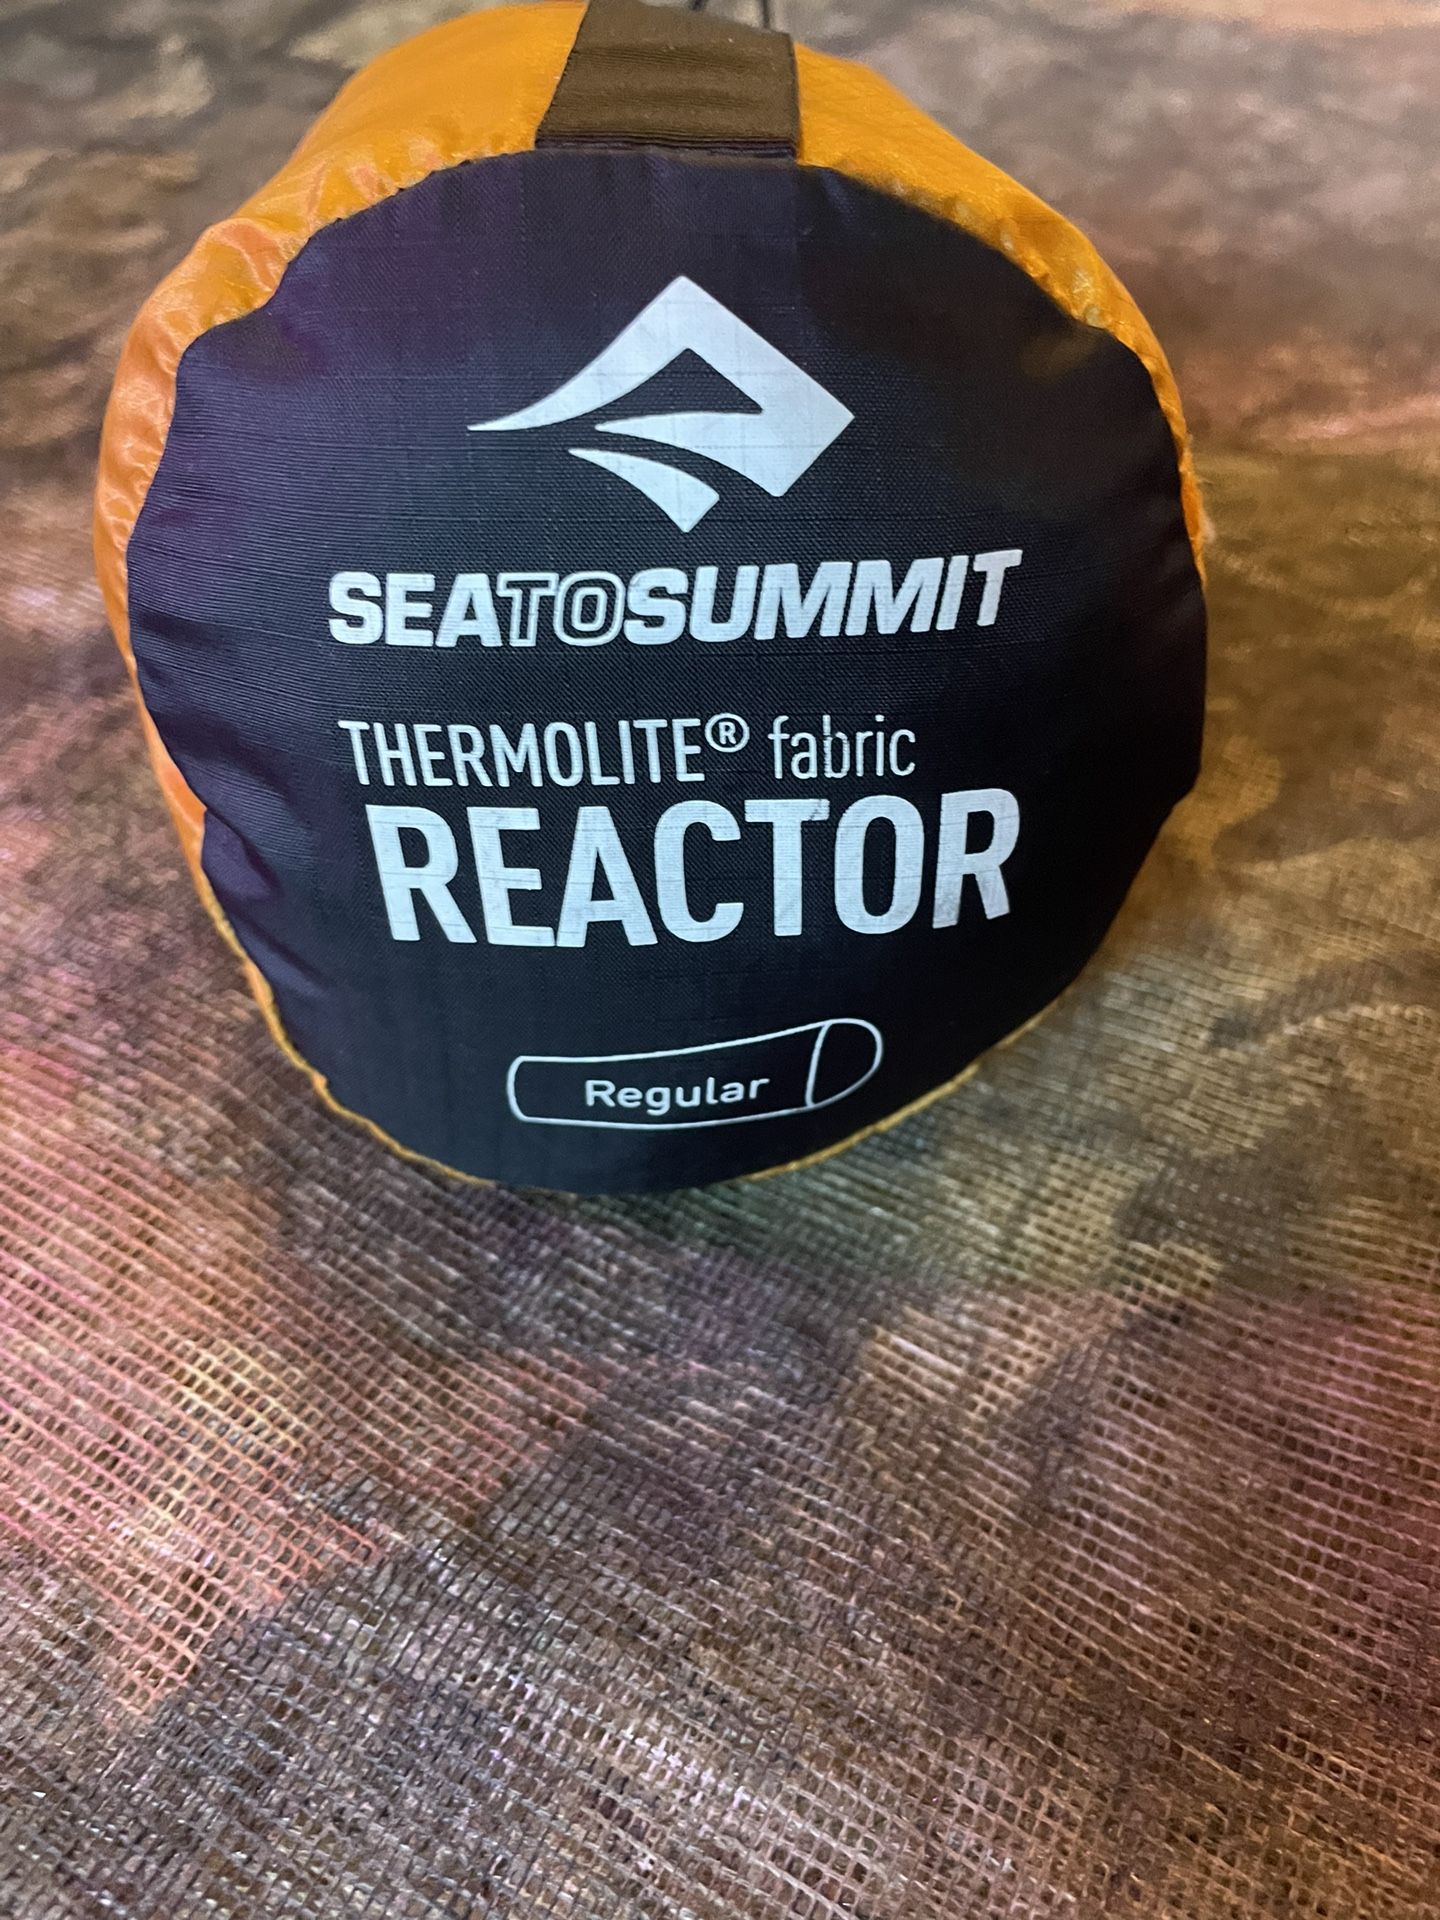 Sea To Summit Reactor Sleeping Bag Liner 